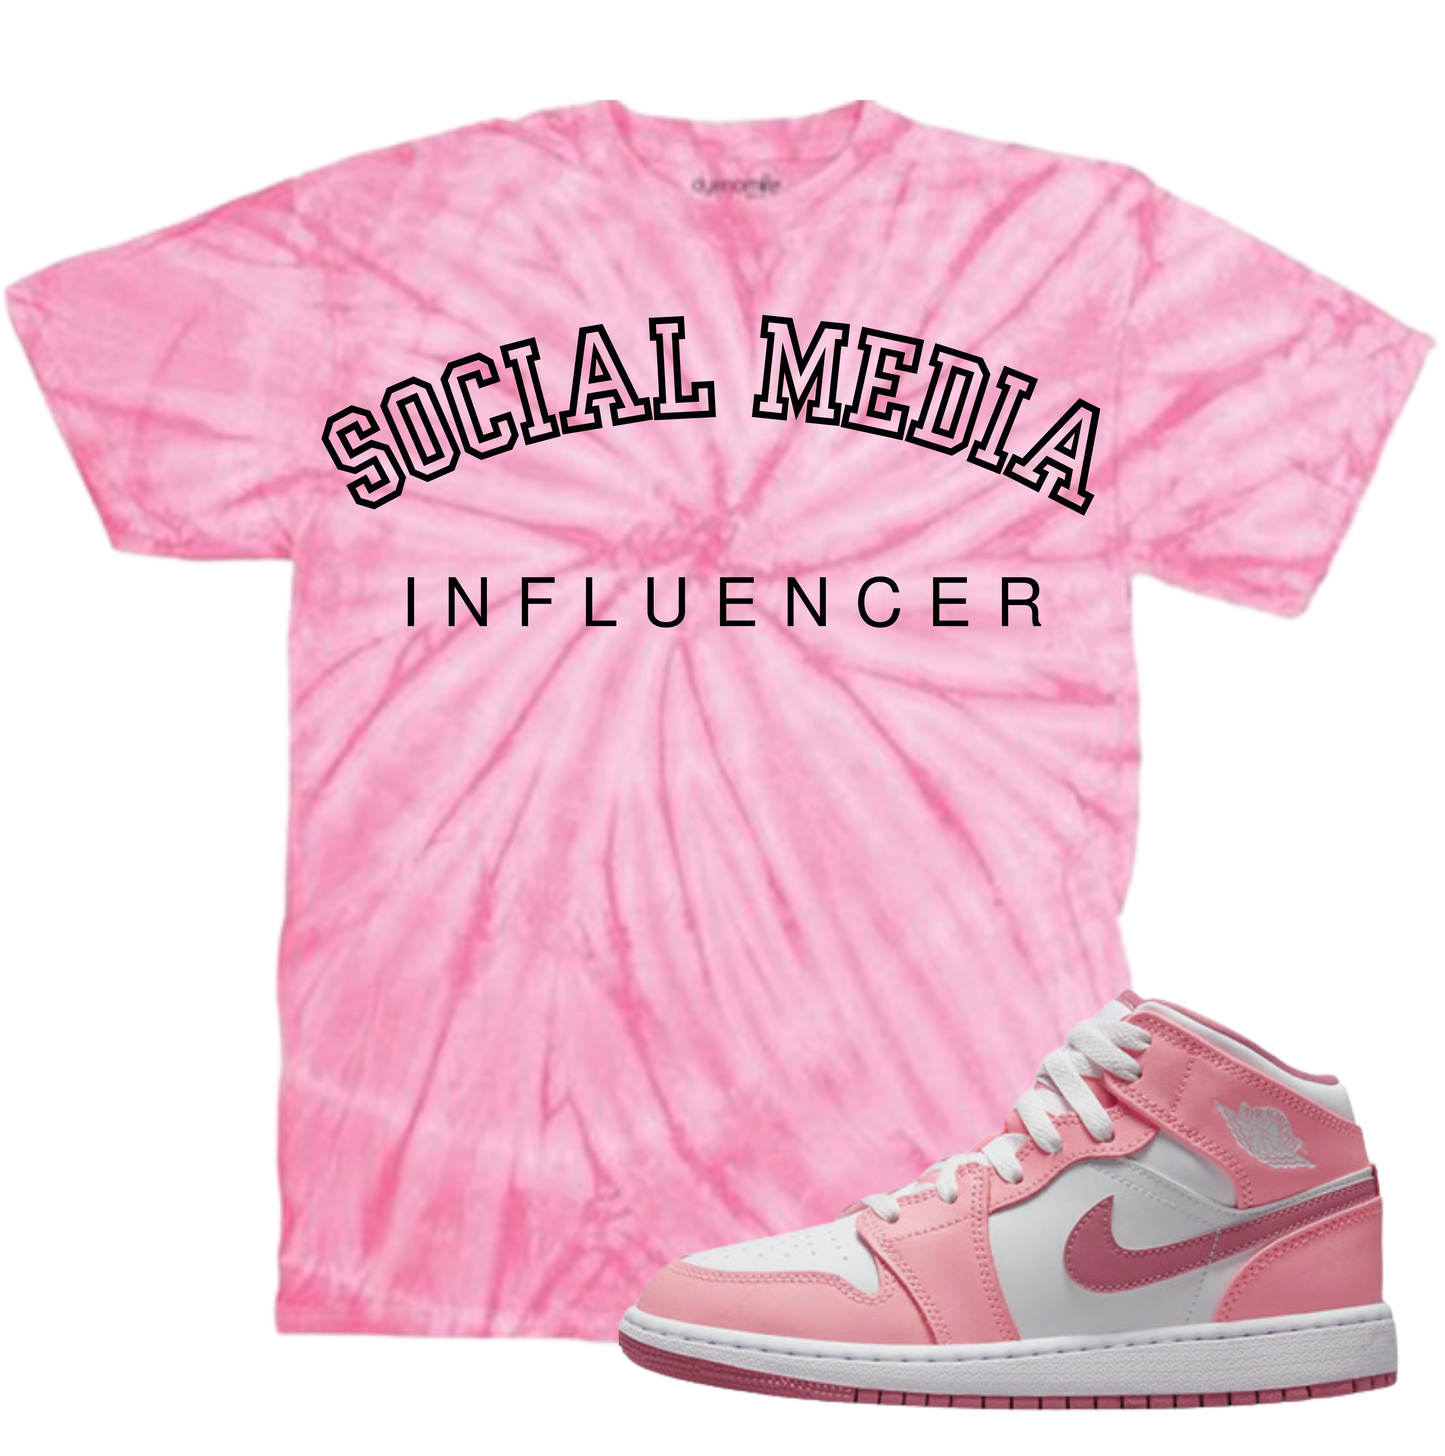 Social Media Influencer - Tie-Dye T-Shirt